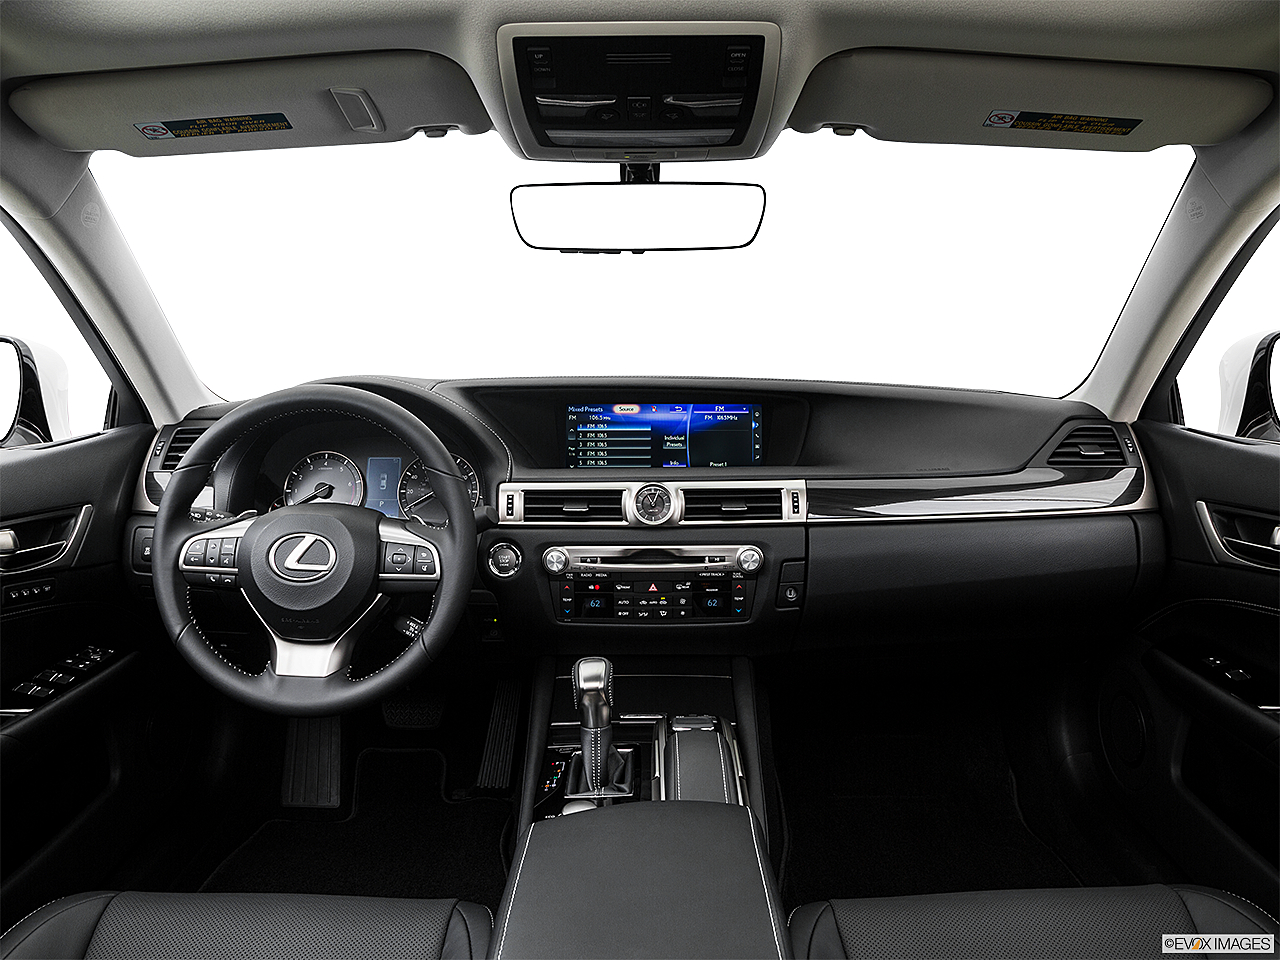 2016 Lexus GS 200t 4dr Sedan - Research - GrooveCar